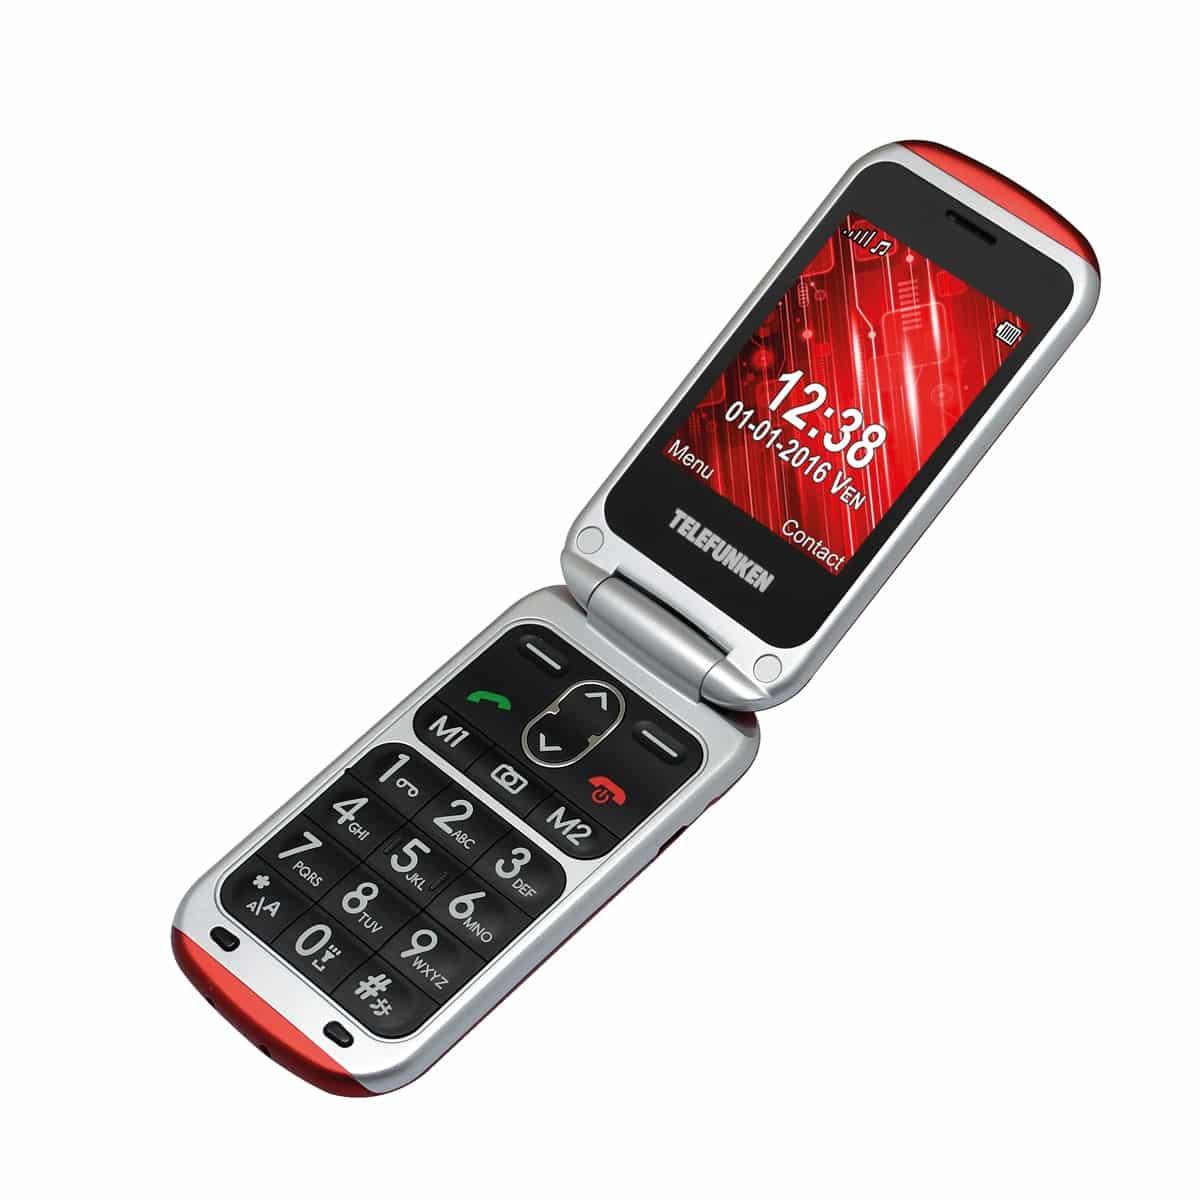 Teléfono móvil libre Telefunken TM240 rojo